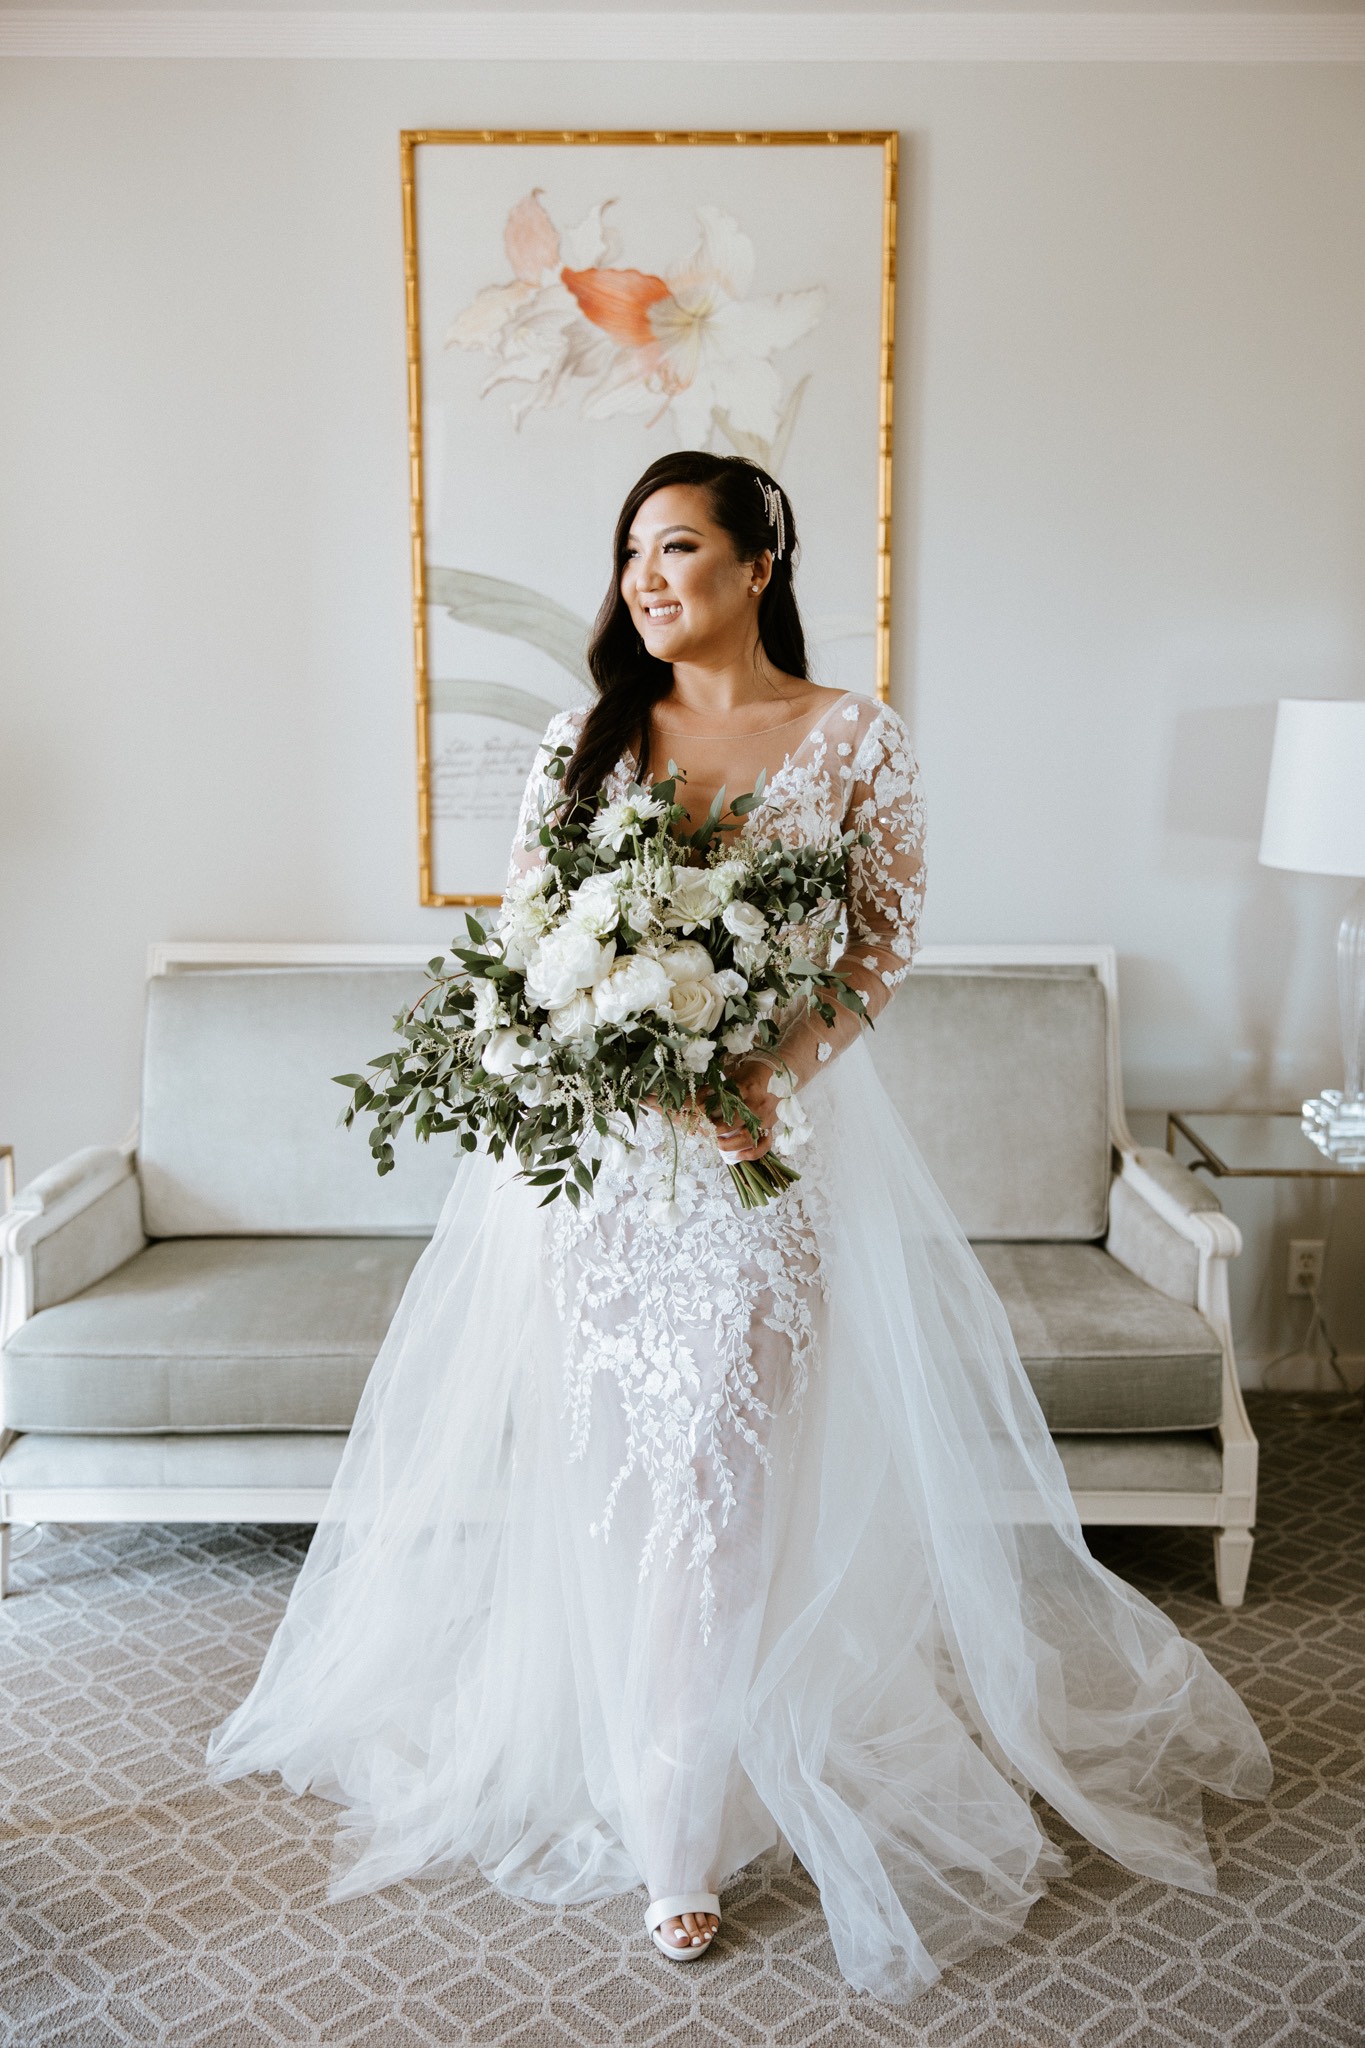 Bride in wedding dress holding flowers